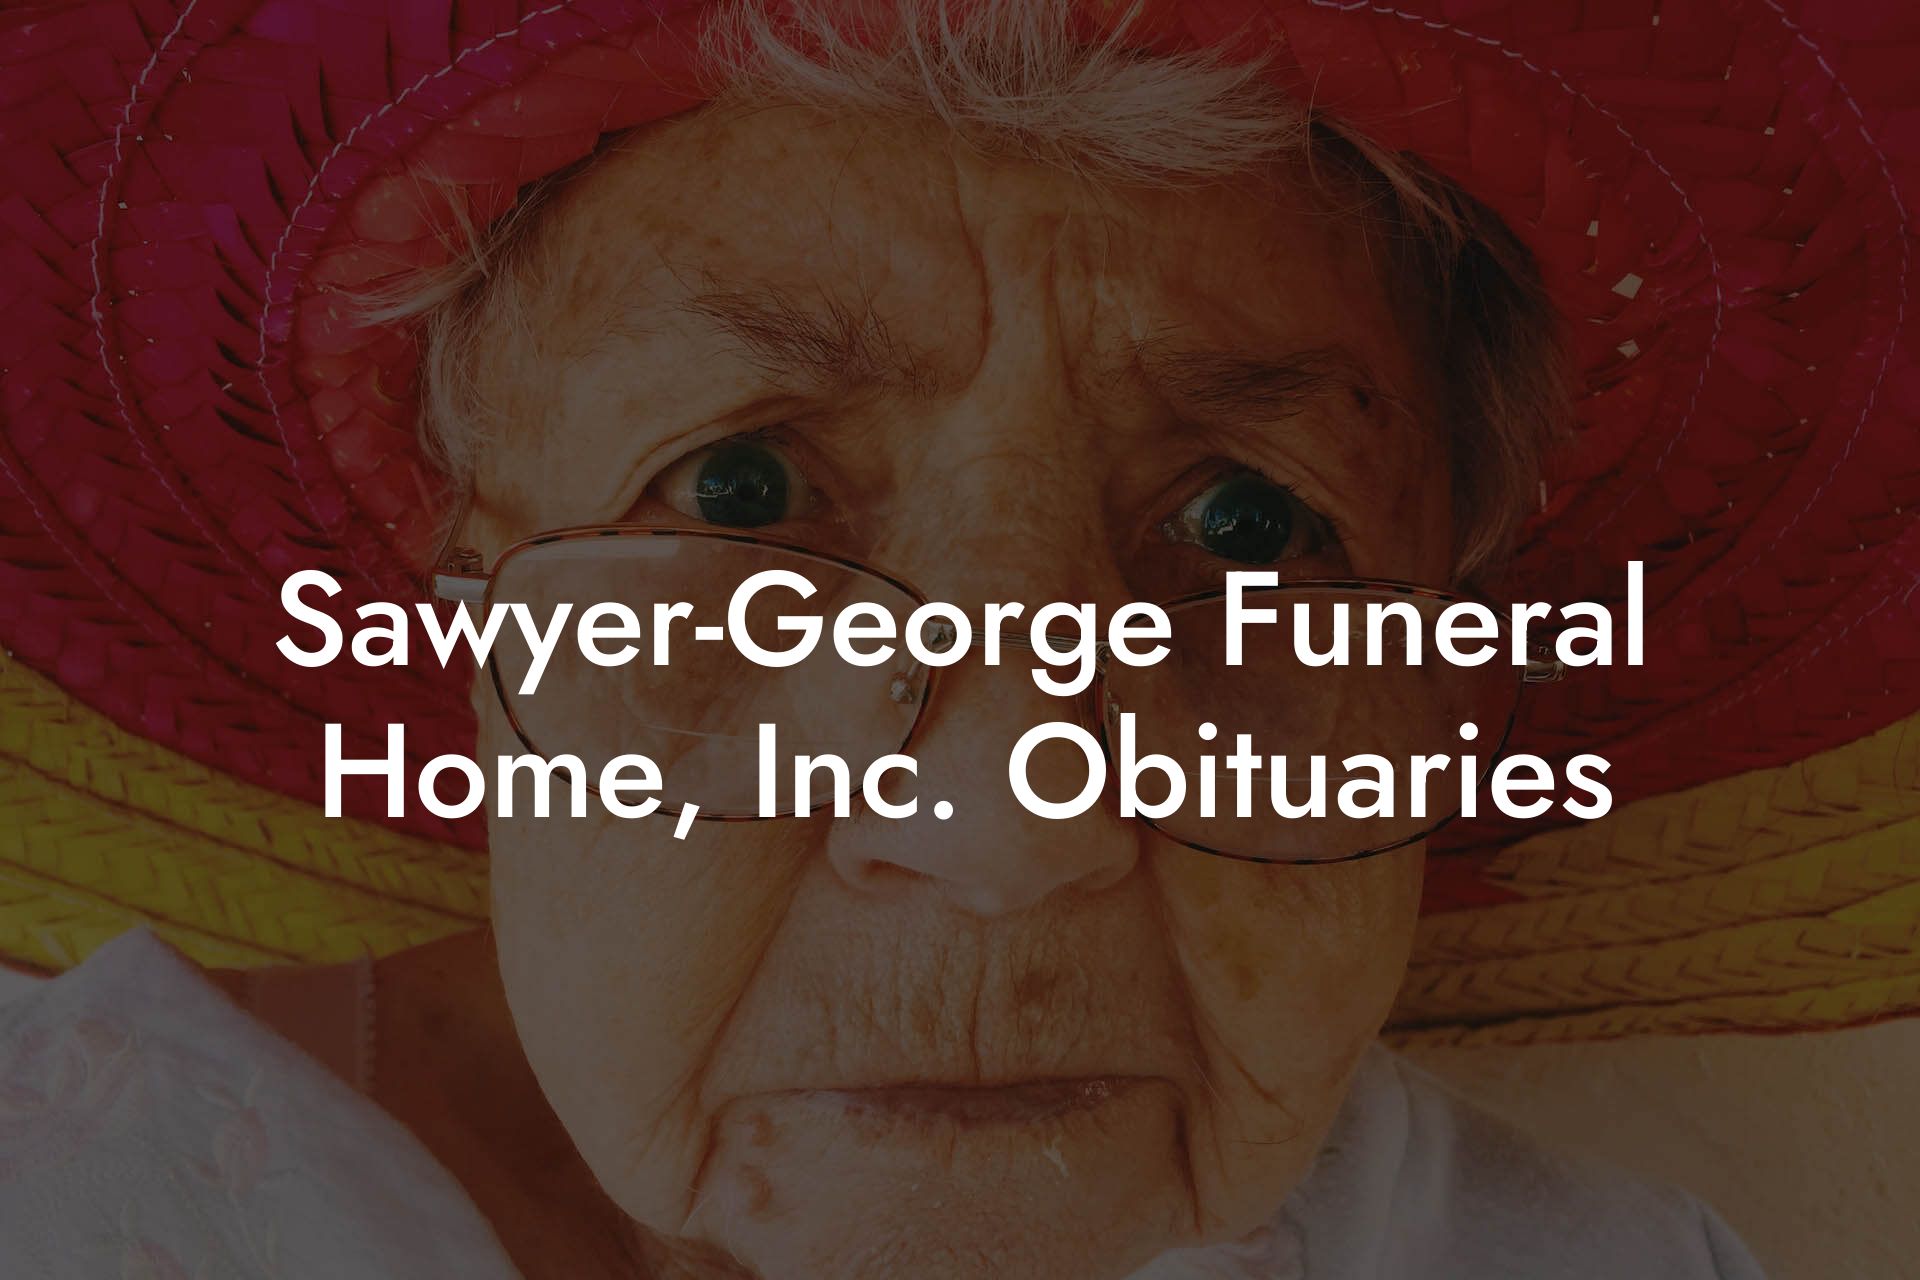 Sawyer-George Funeral Home, Inc. Obituaries